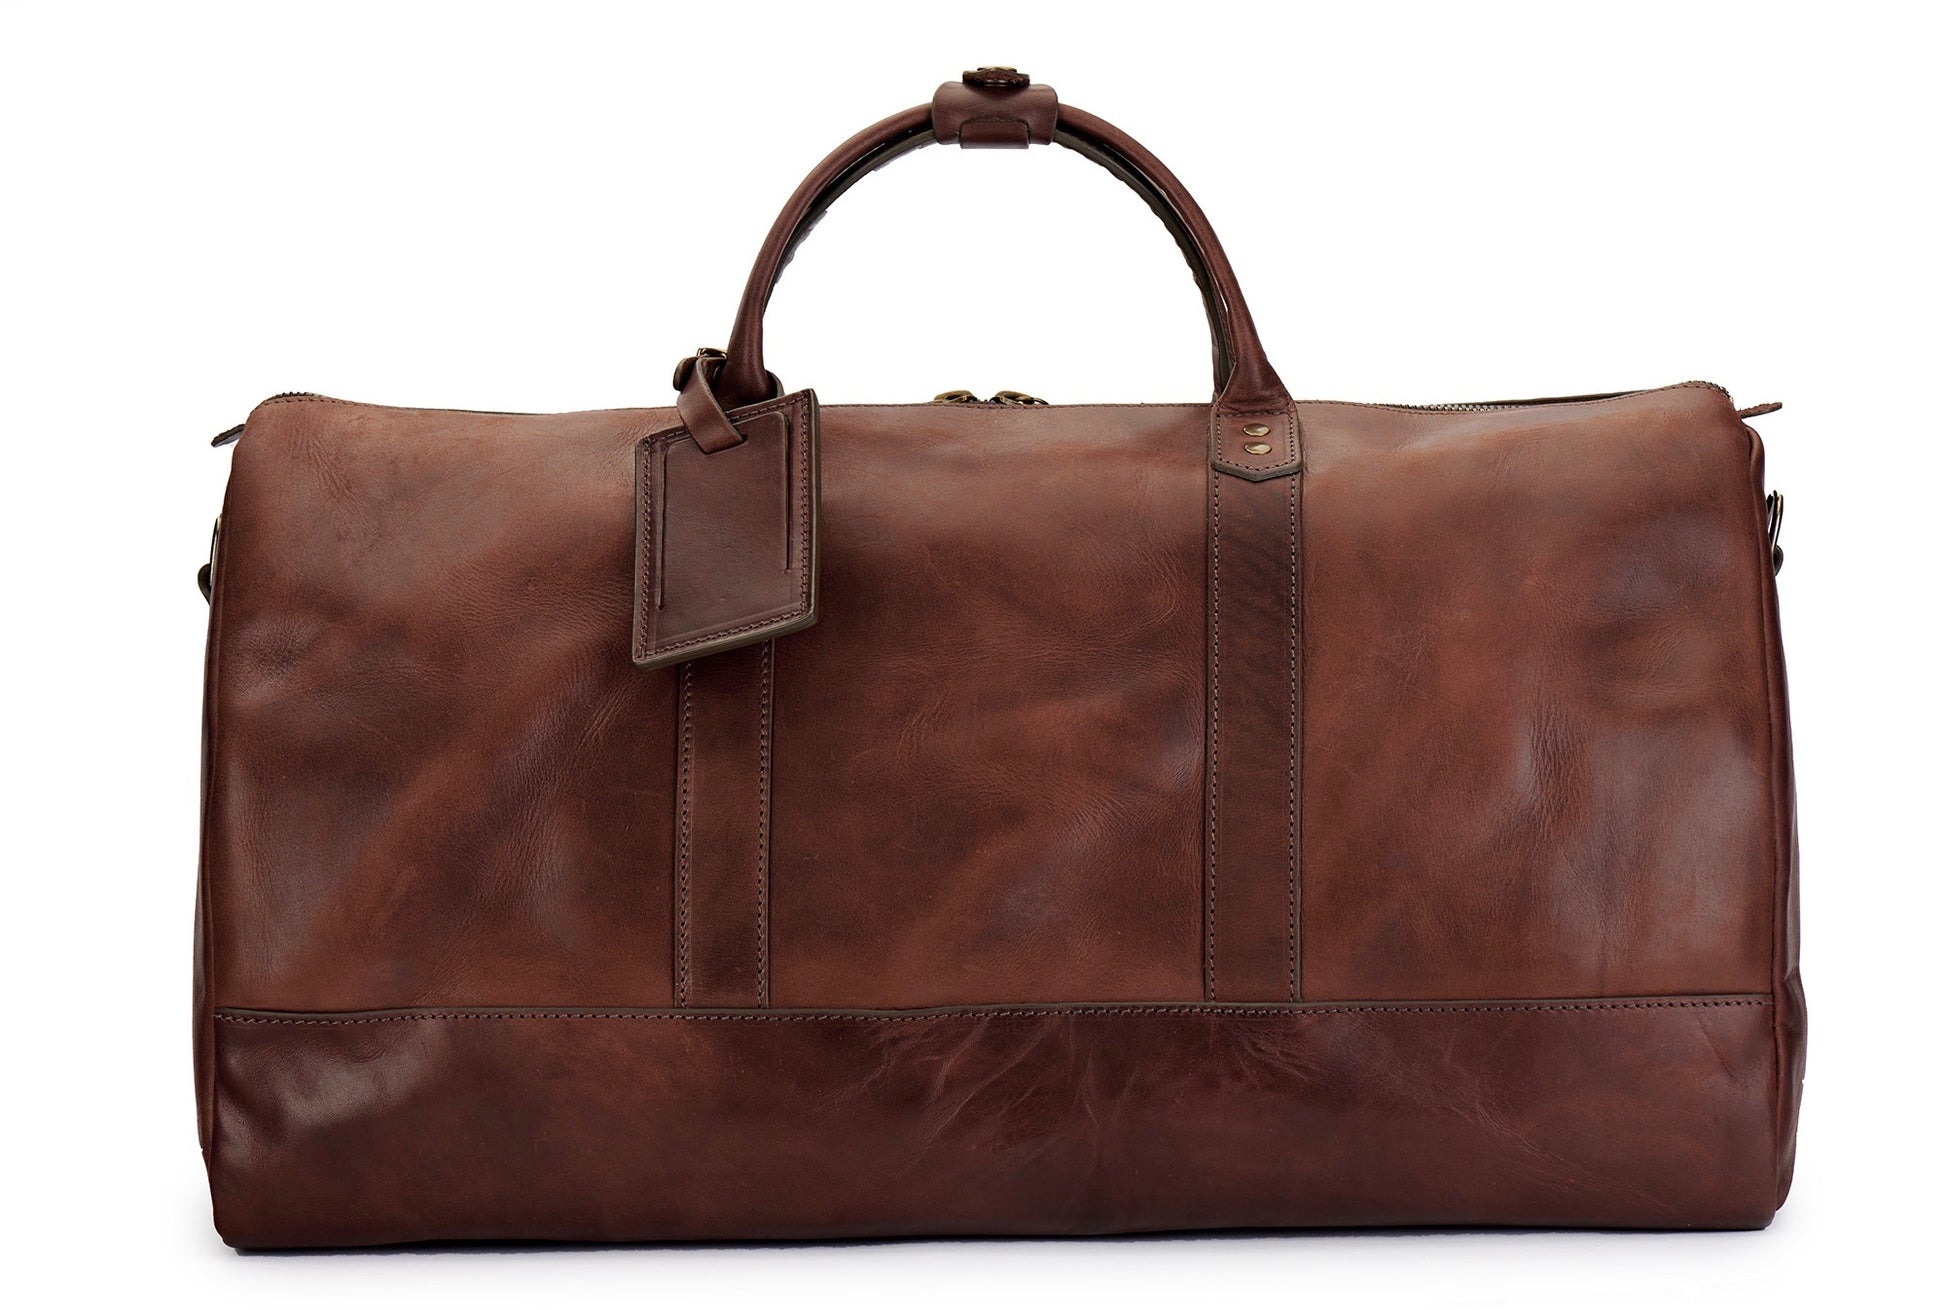 saddle tan full grain leather weekender bag with luggage tag in vintage brown